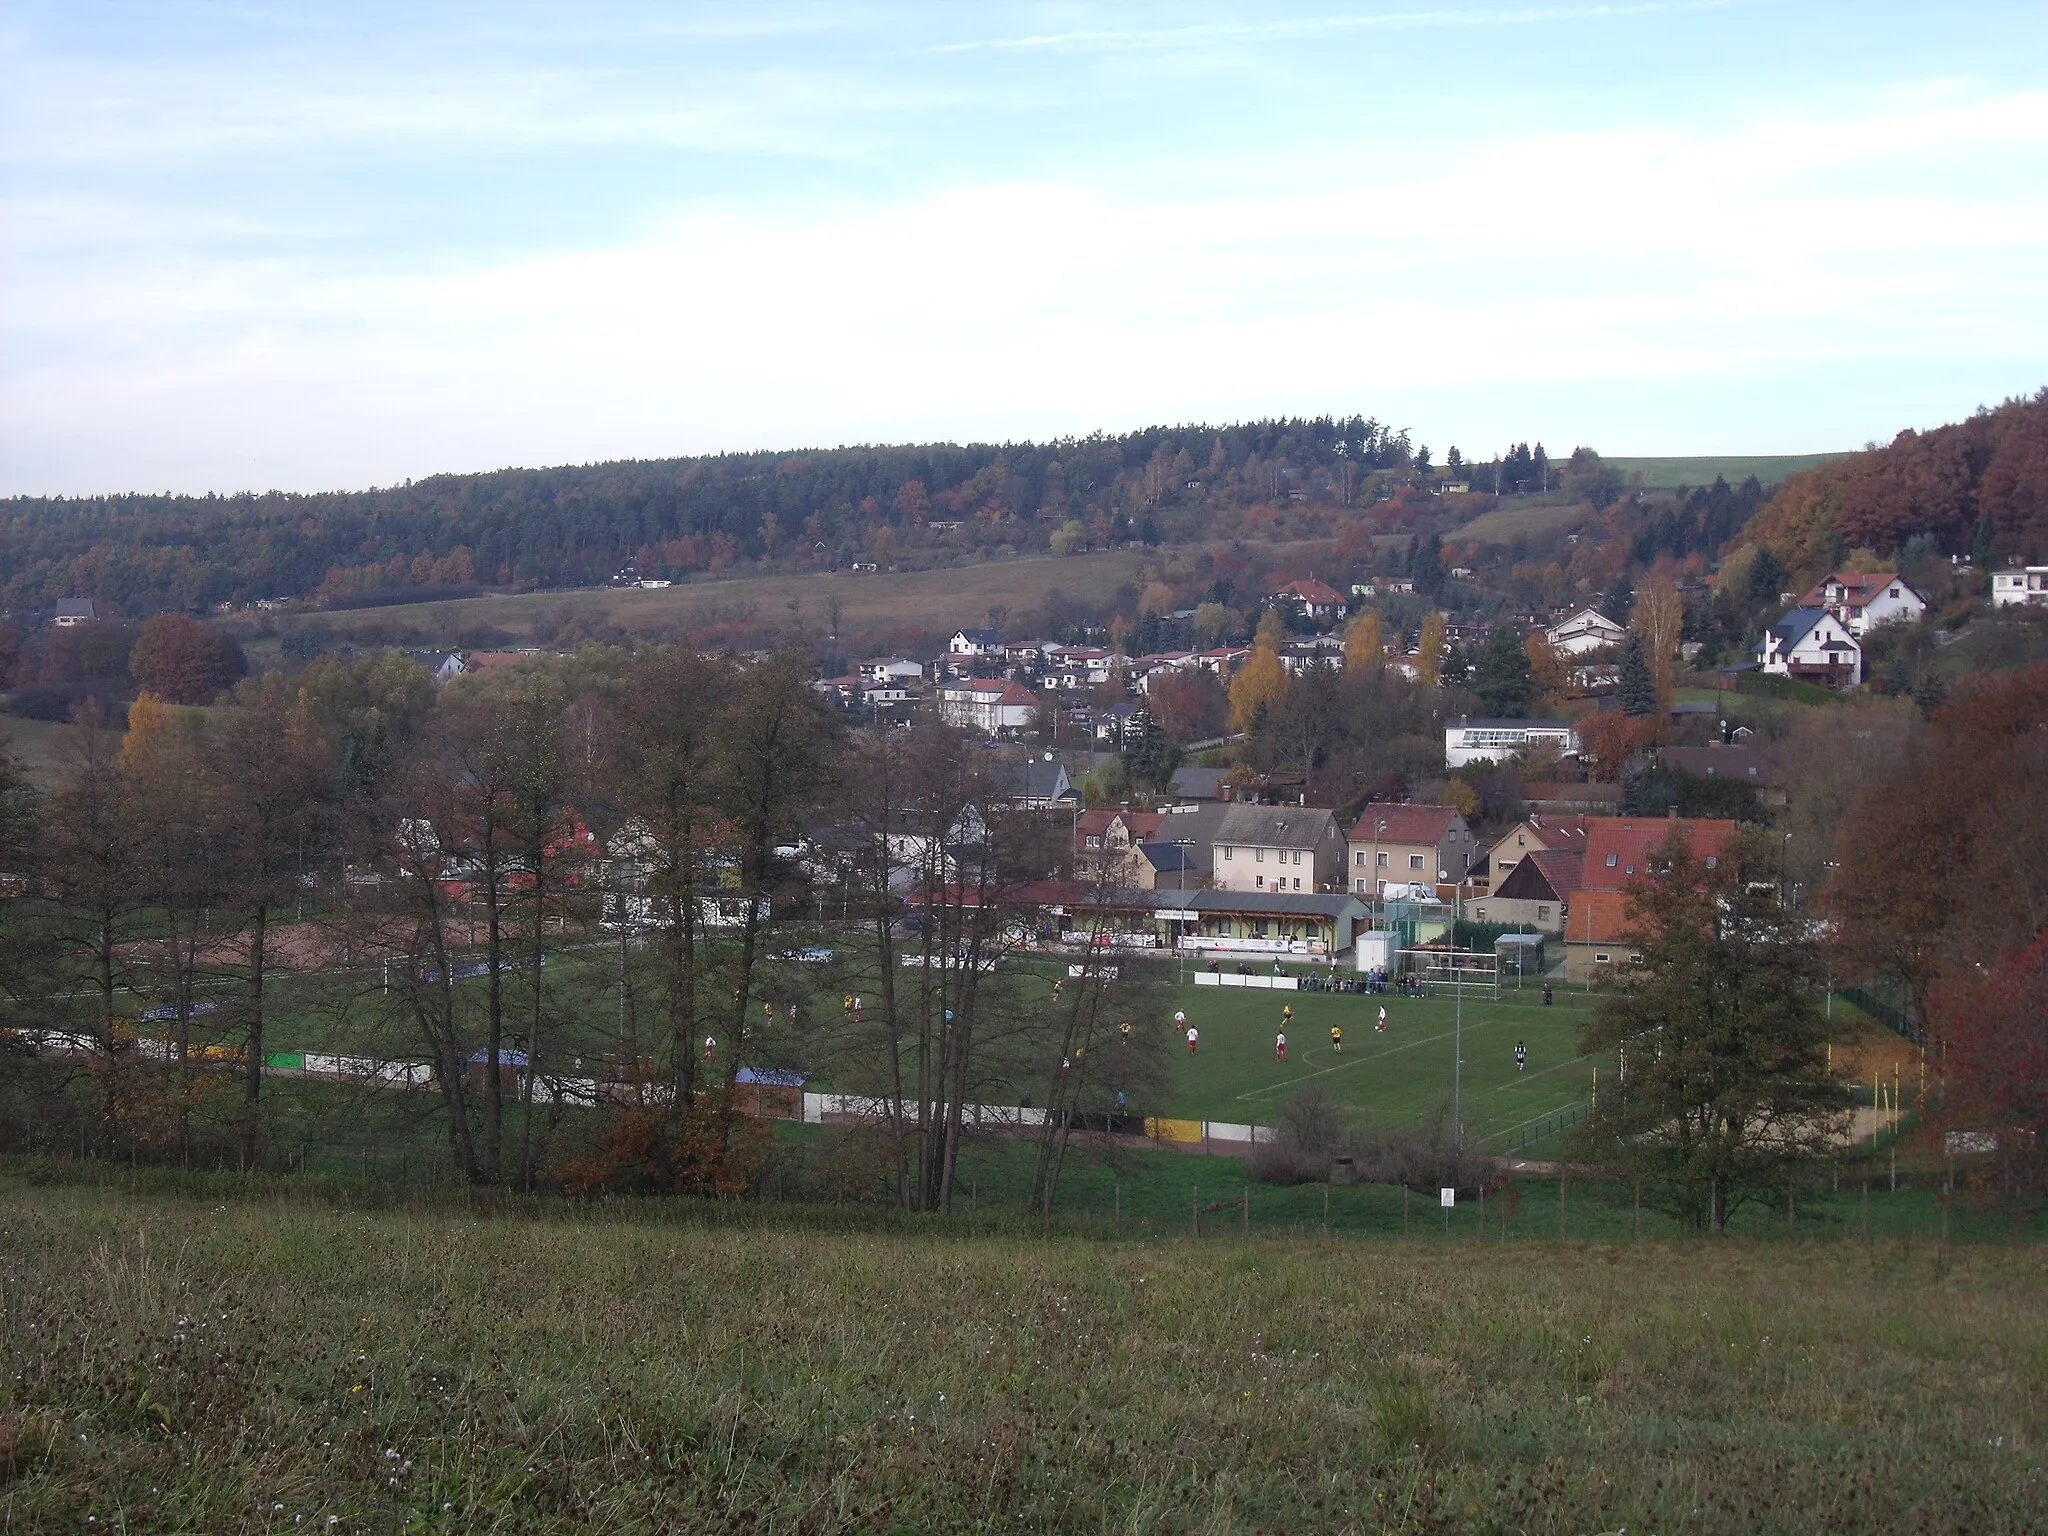 Photo showing: View of the sports ground of TSV Gera-Westvororte in Scheubengrobsdorf, Gera, Germany, in November 2011